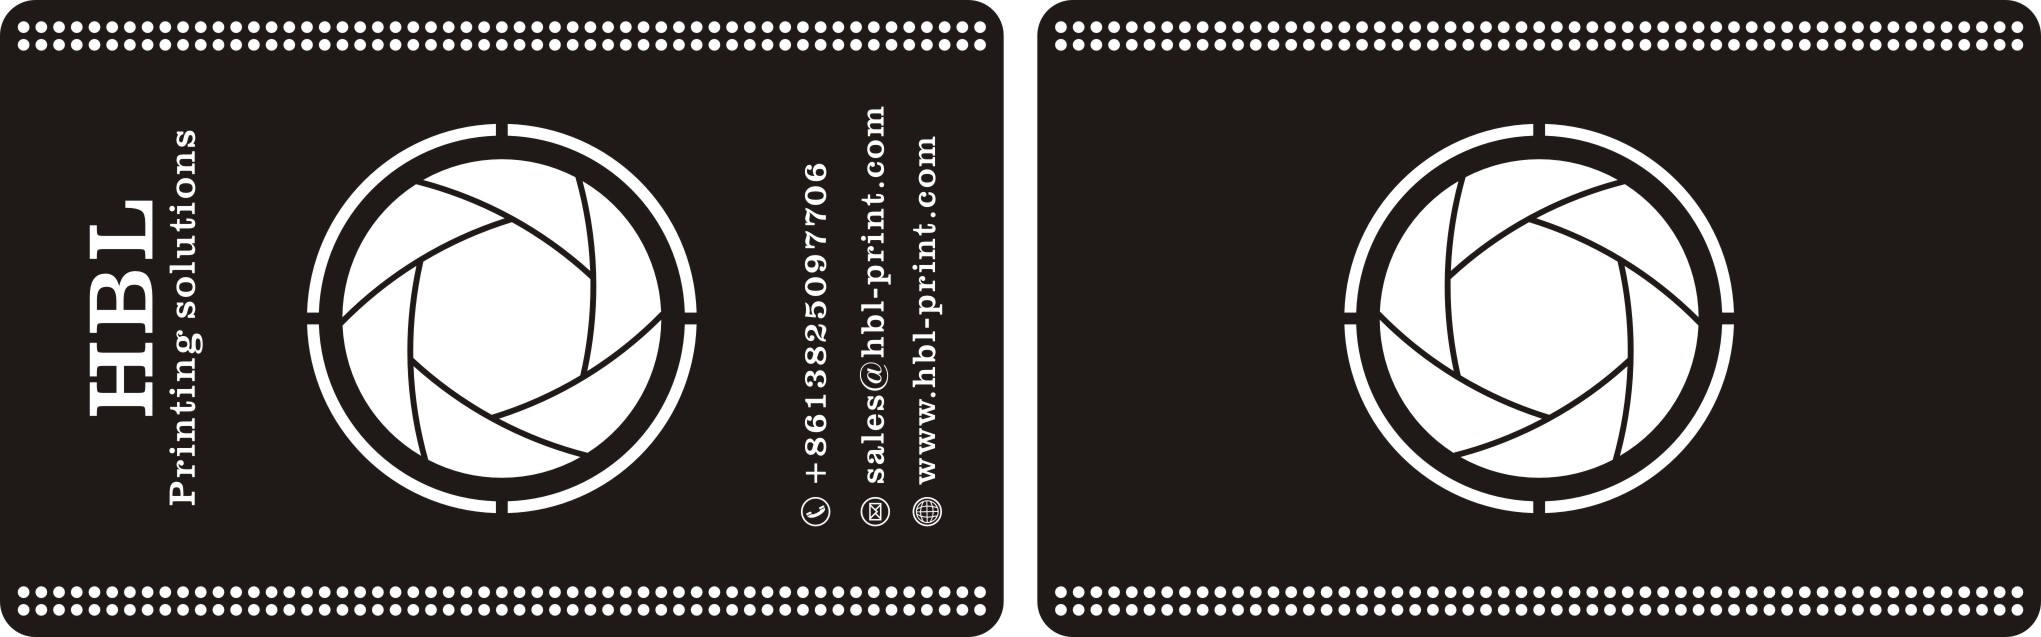 Black Matte Card Template (6)